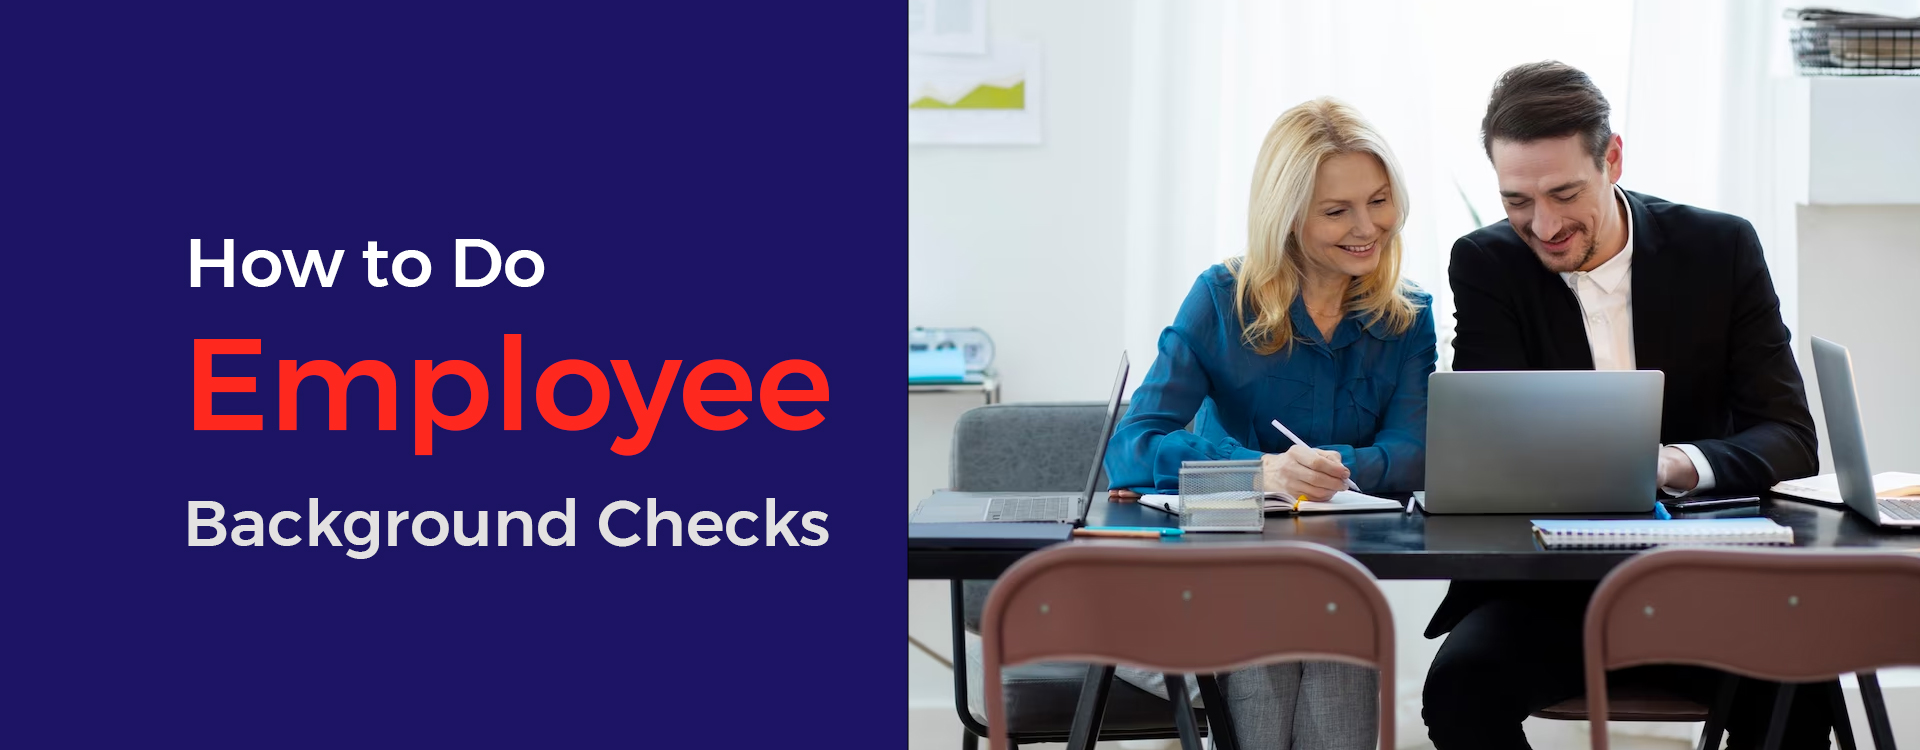 How to Do Employee Background Checks